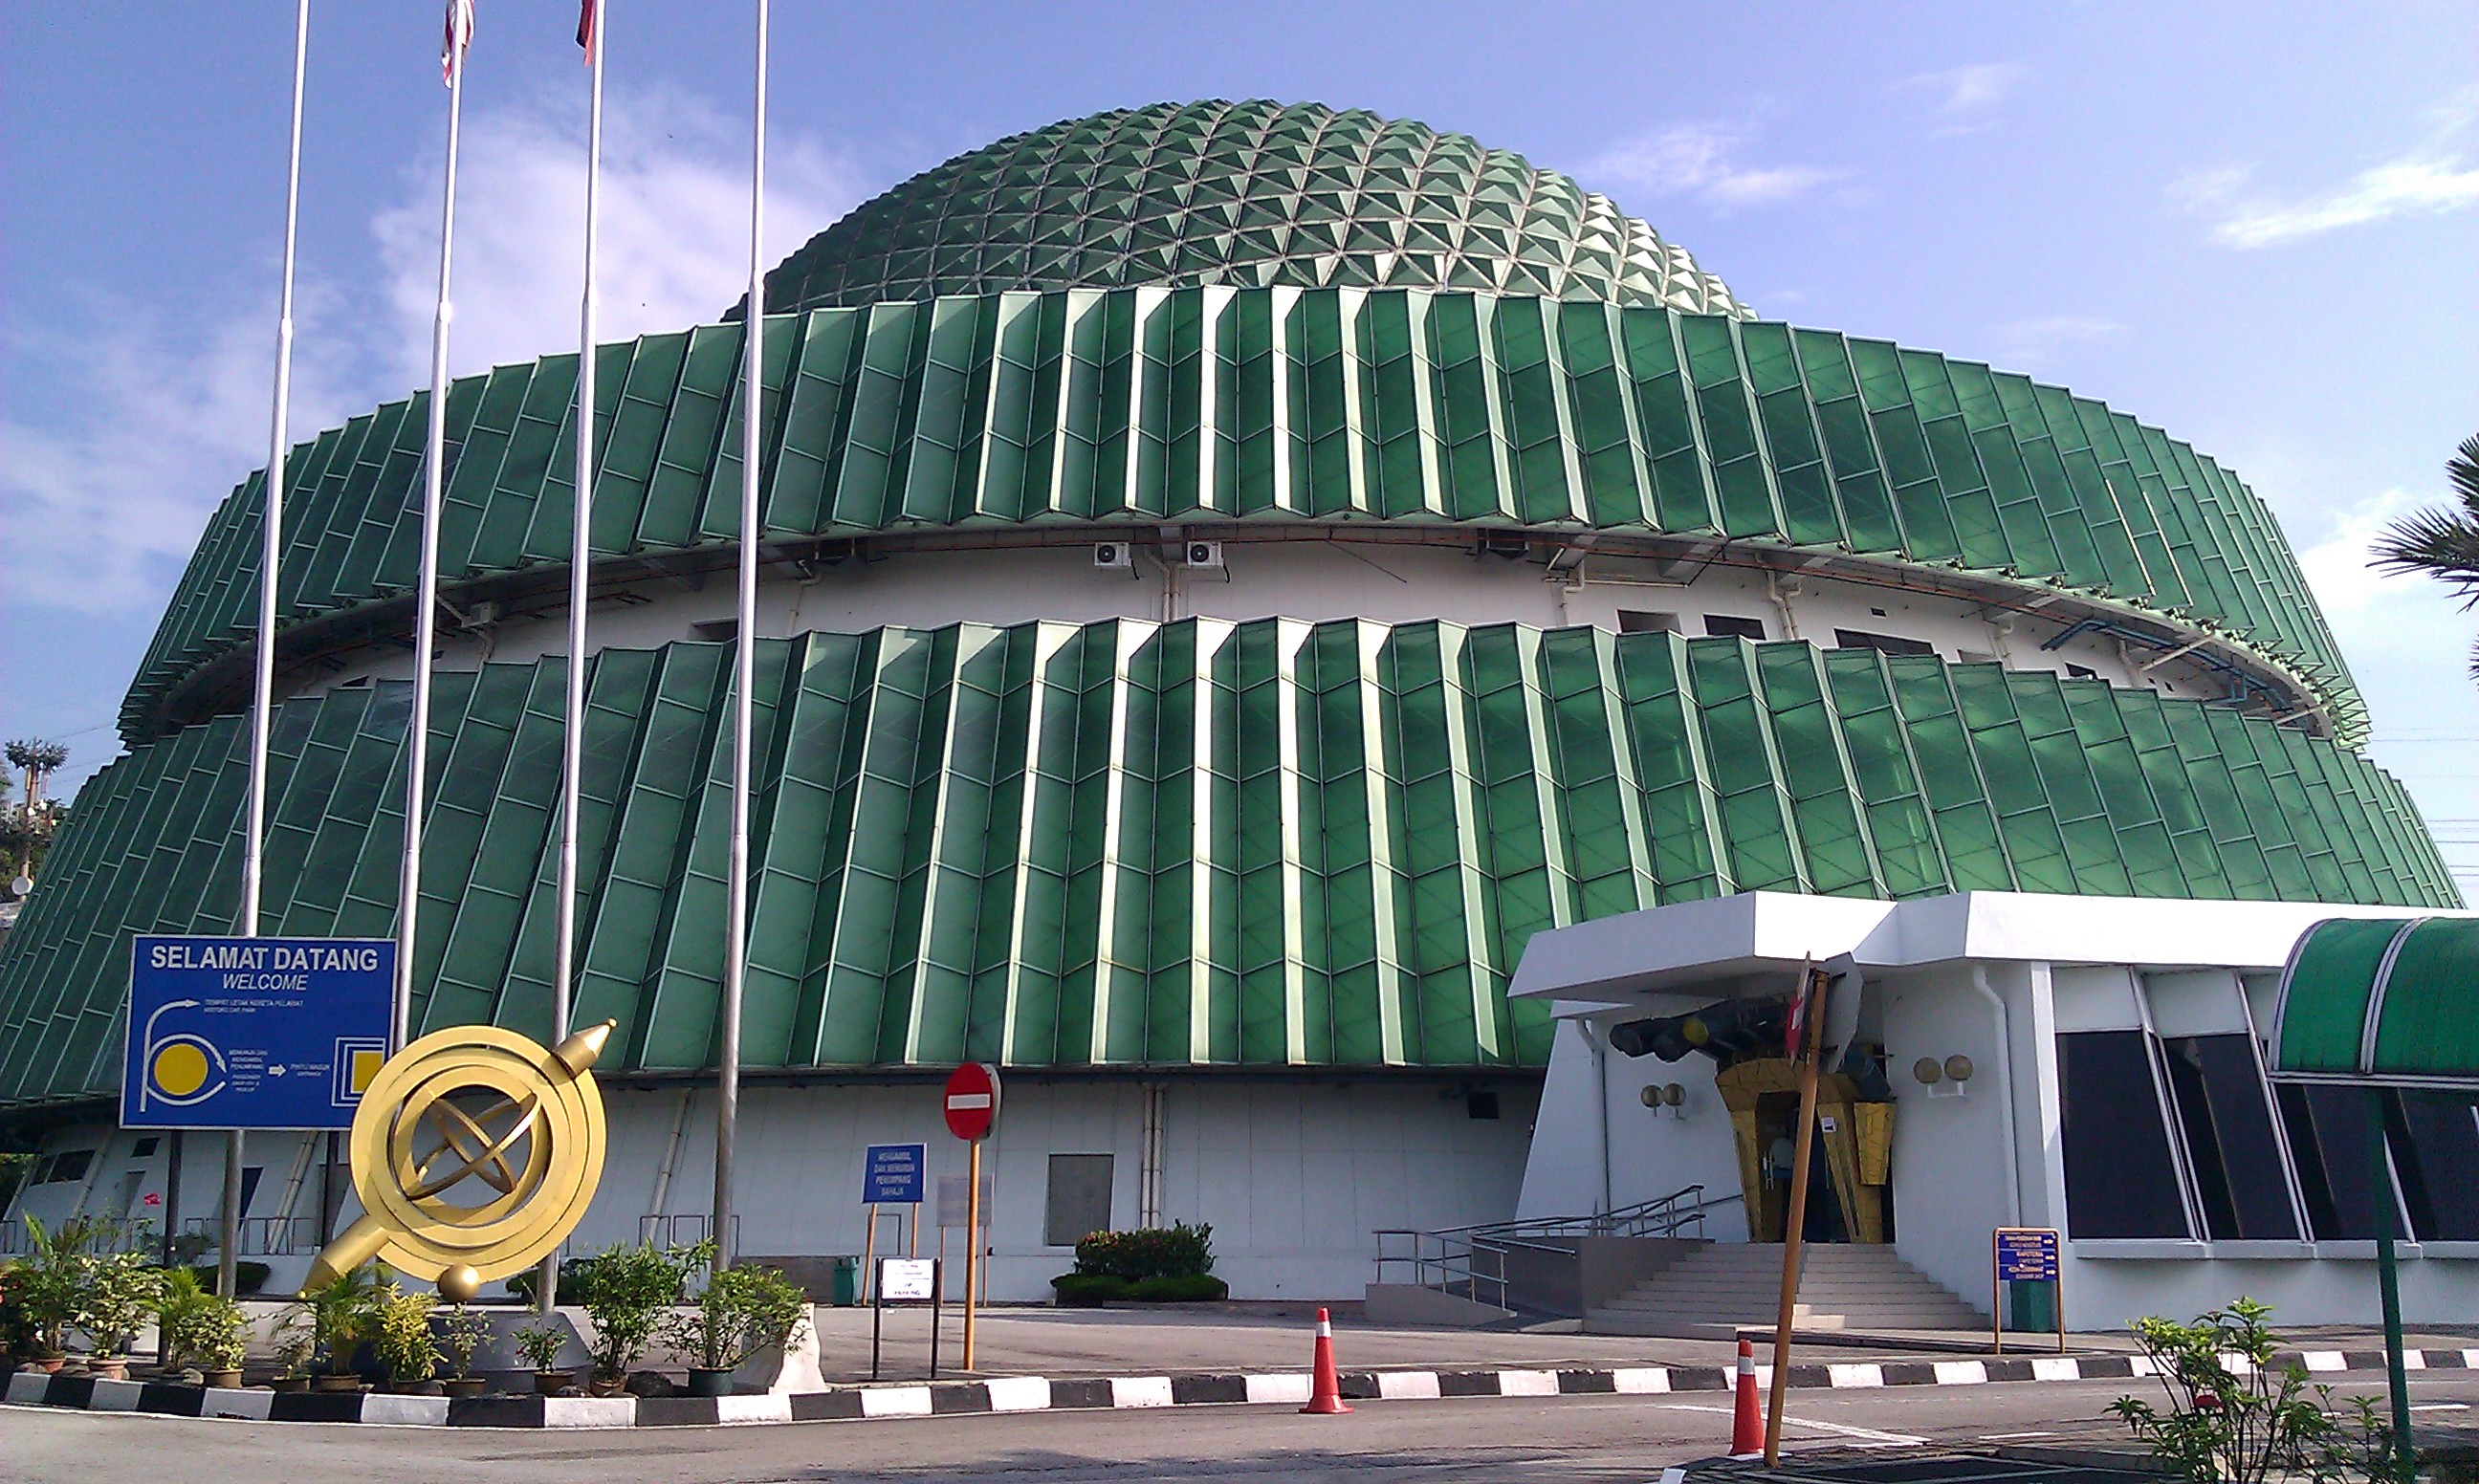 Pusat Sains Negara - the National Science Centre in Kuala Lumpur.